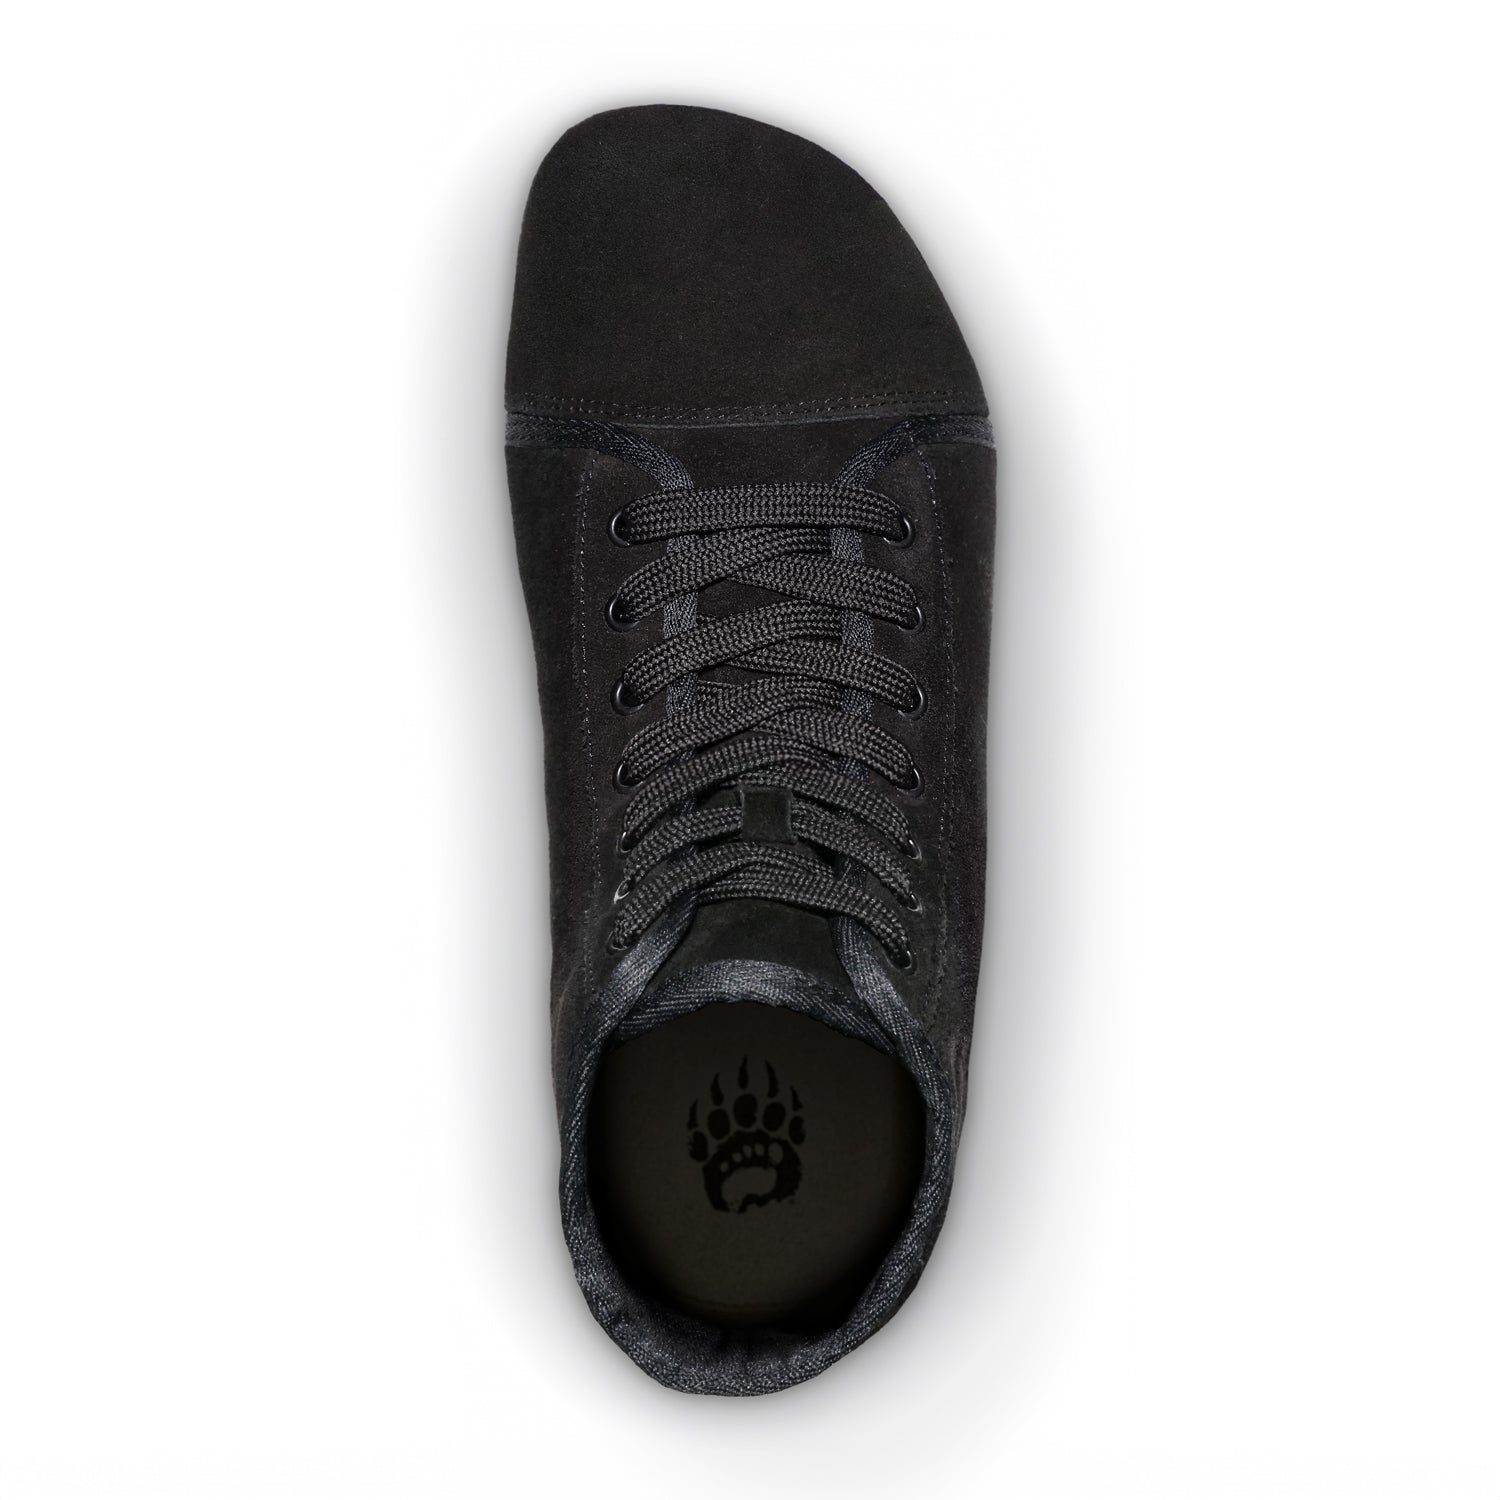 Bearfoot - Ursus S - HT / Black - Shoe